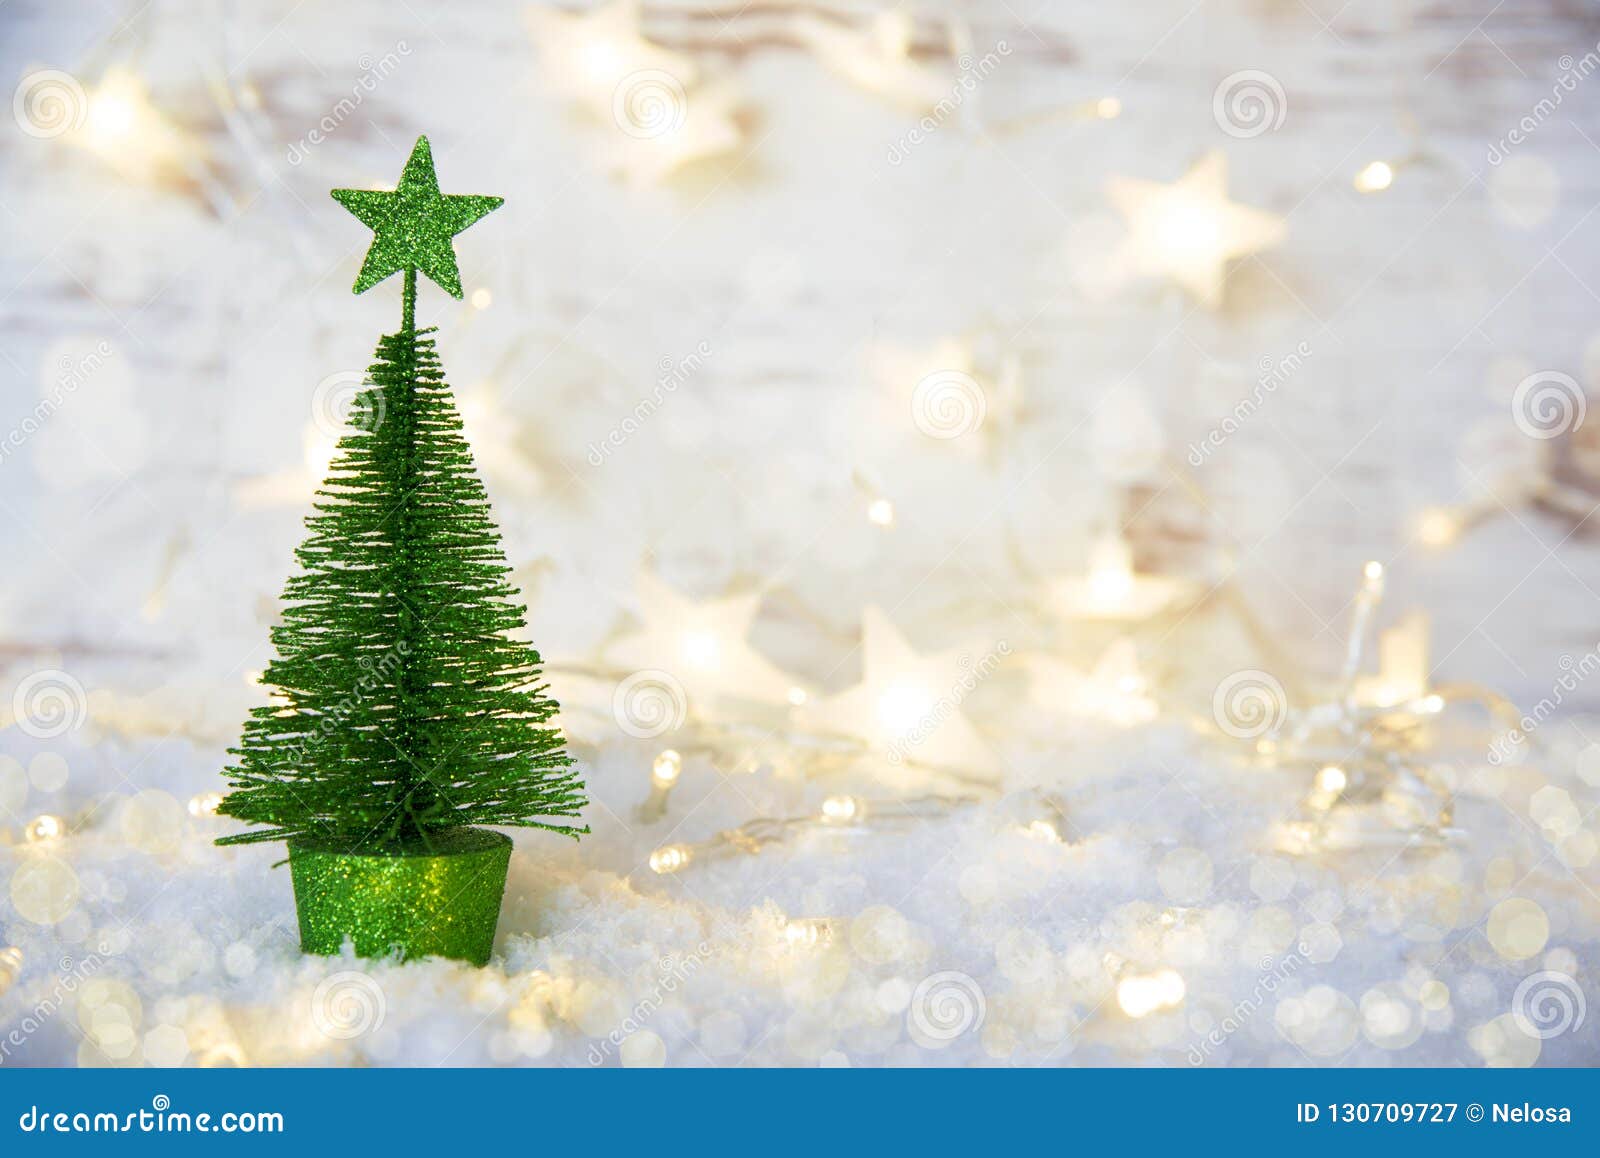 Green Christmas Tree, Fairy Lights, Snow, Star Stock Image - Image of ...